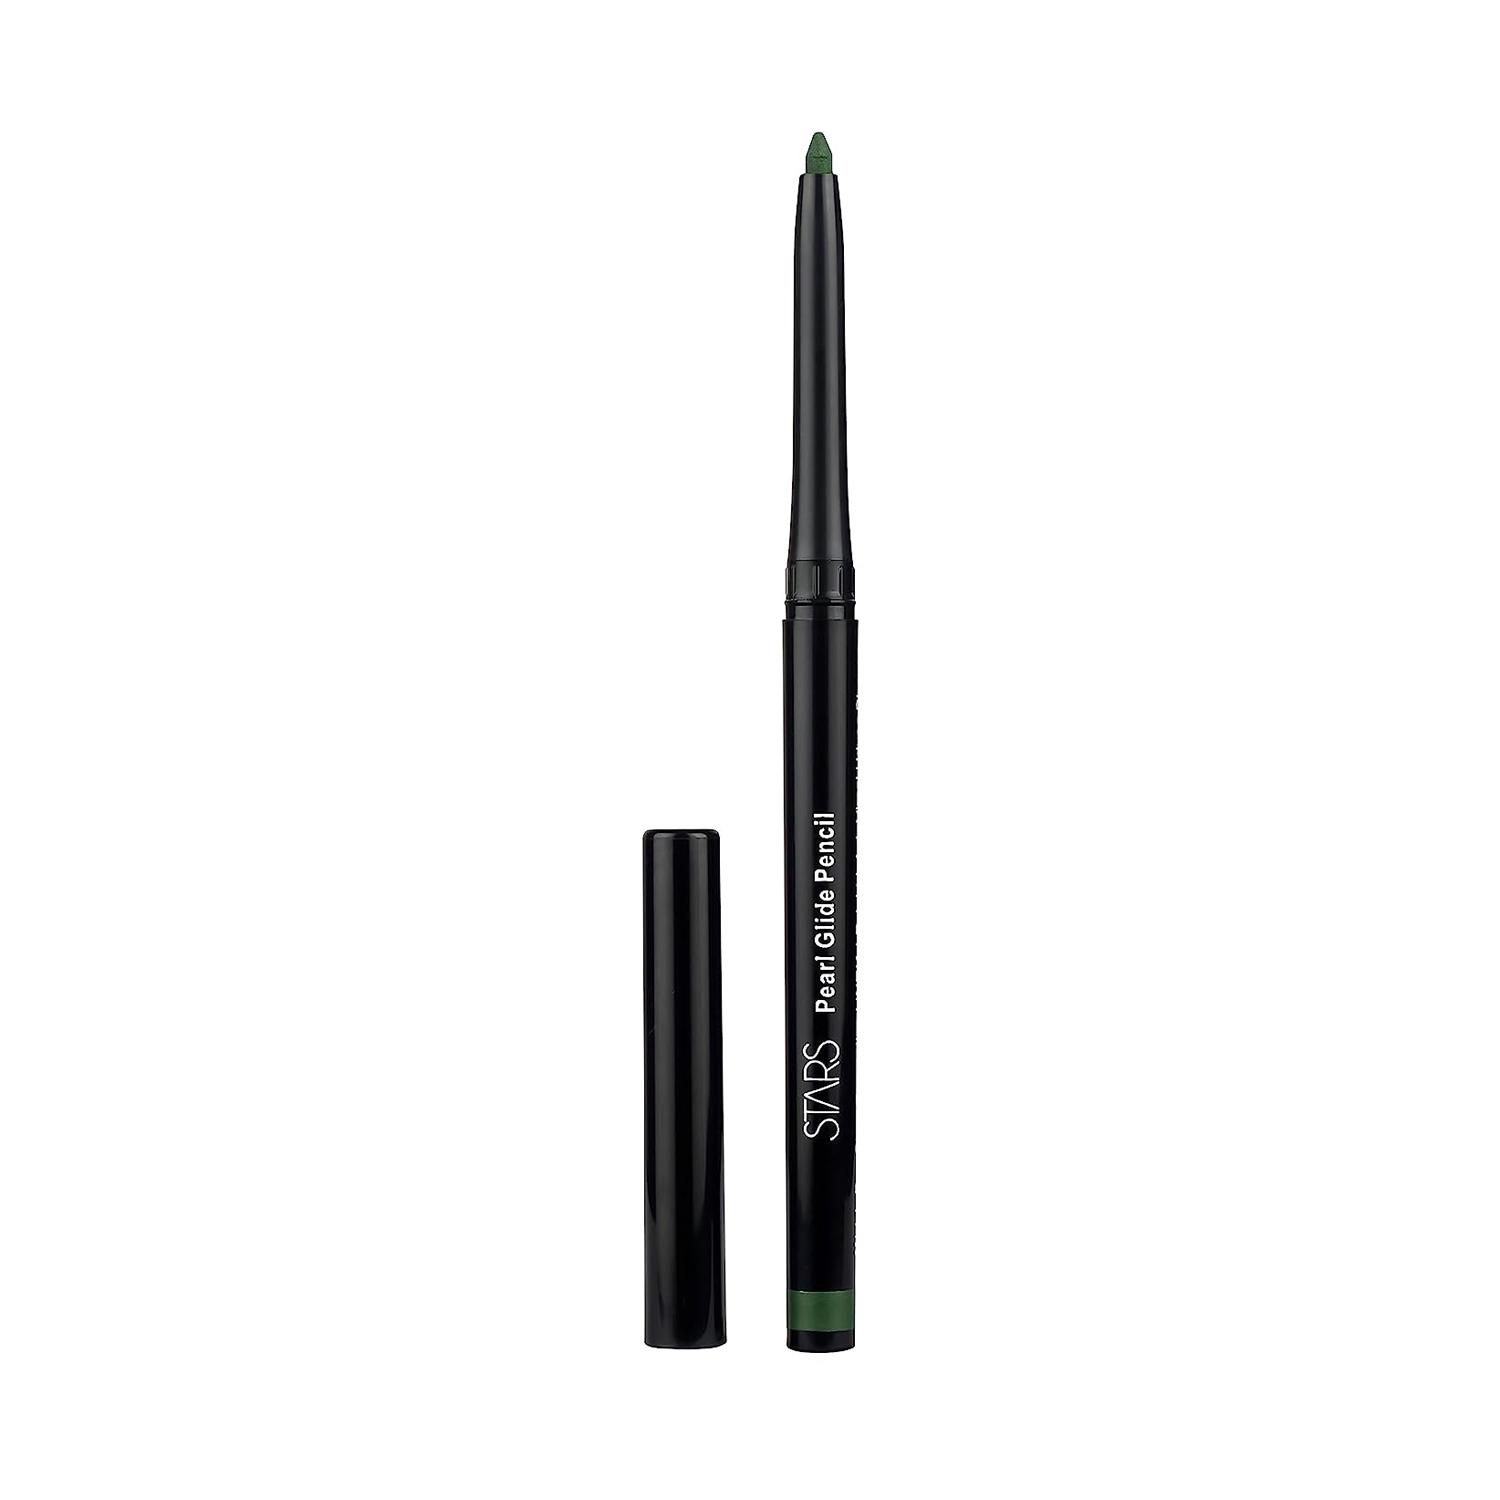 stars cosmetics pearl glide eye pencil - 01 emerald (30g)